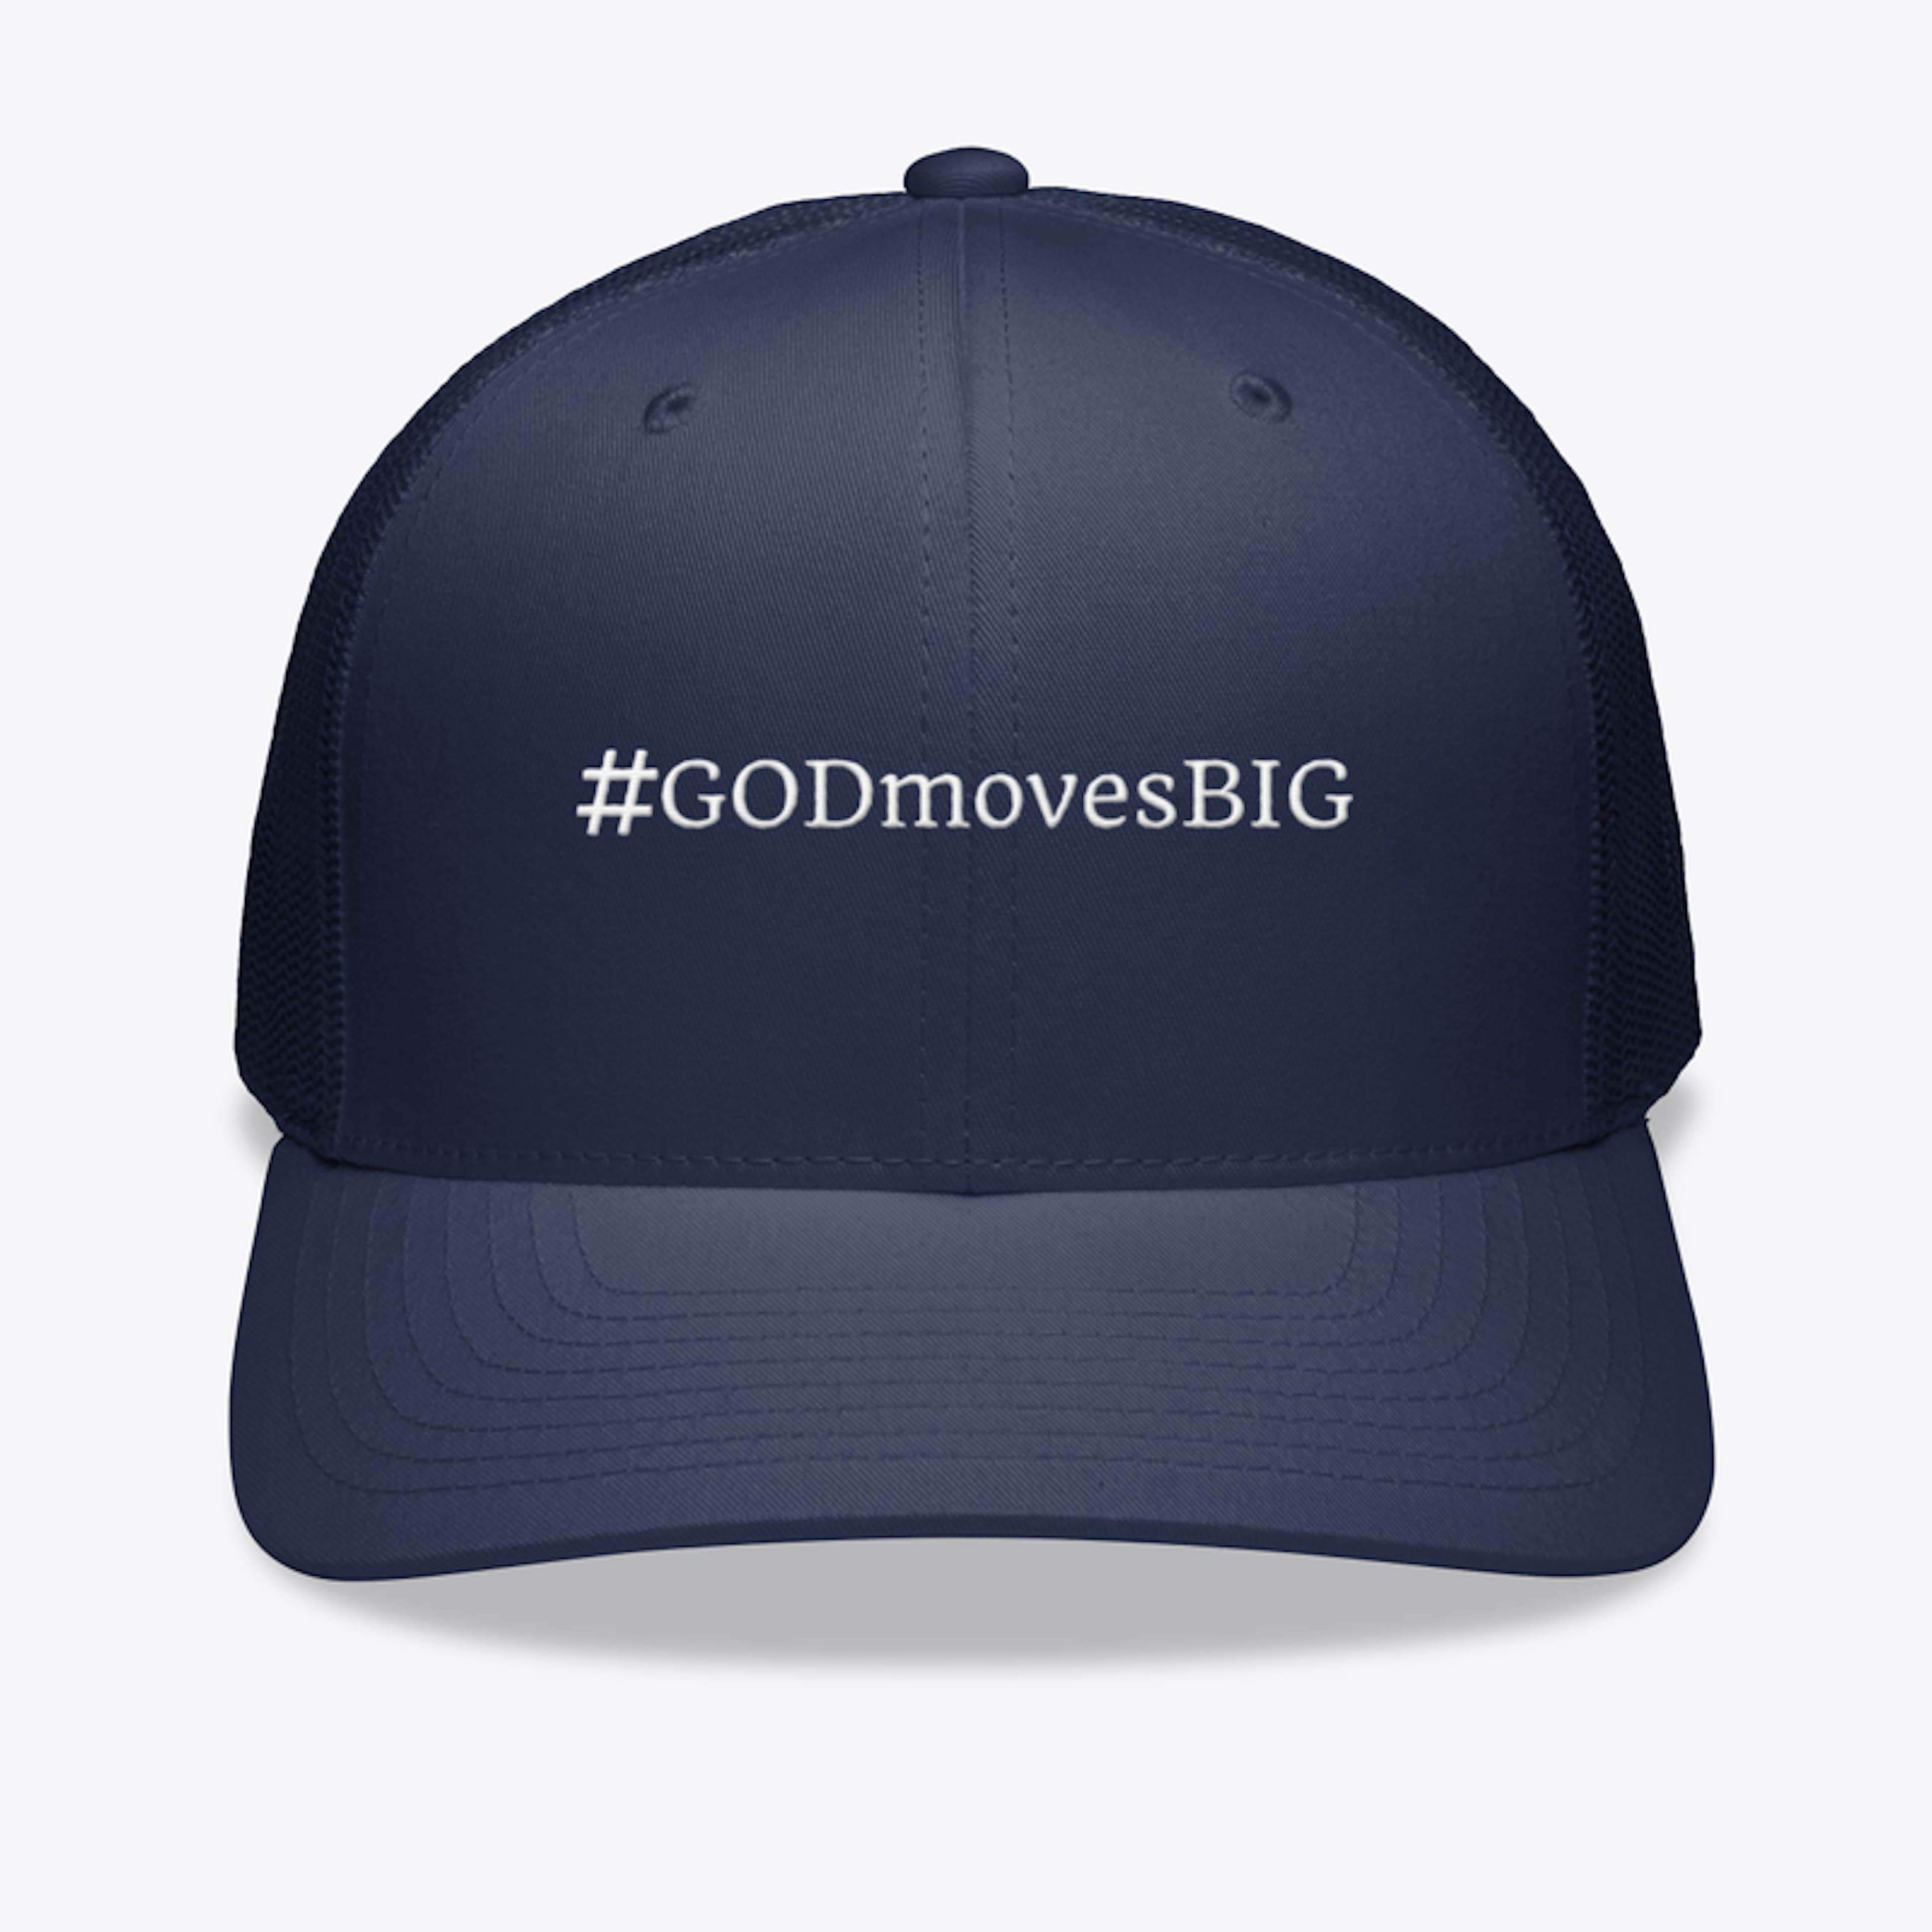 GOD moves BIG! Hat